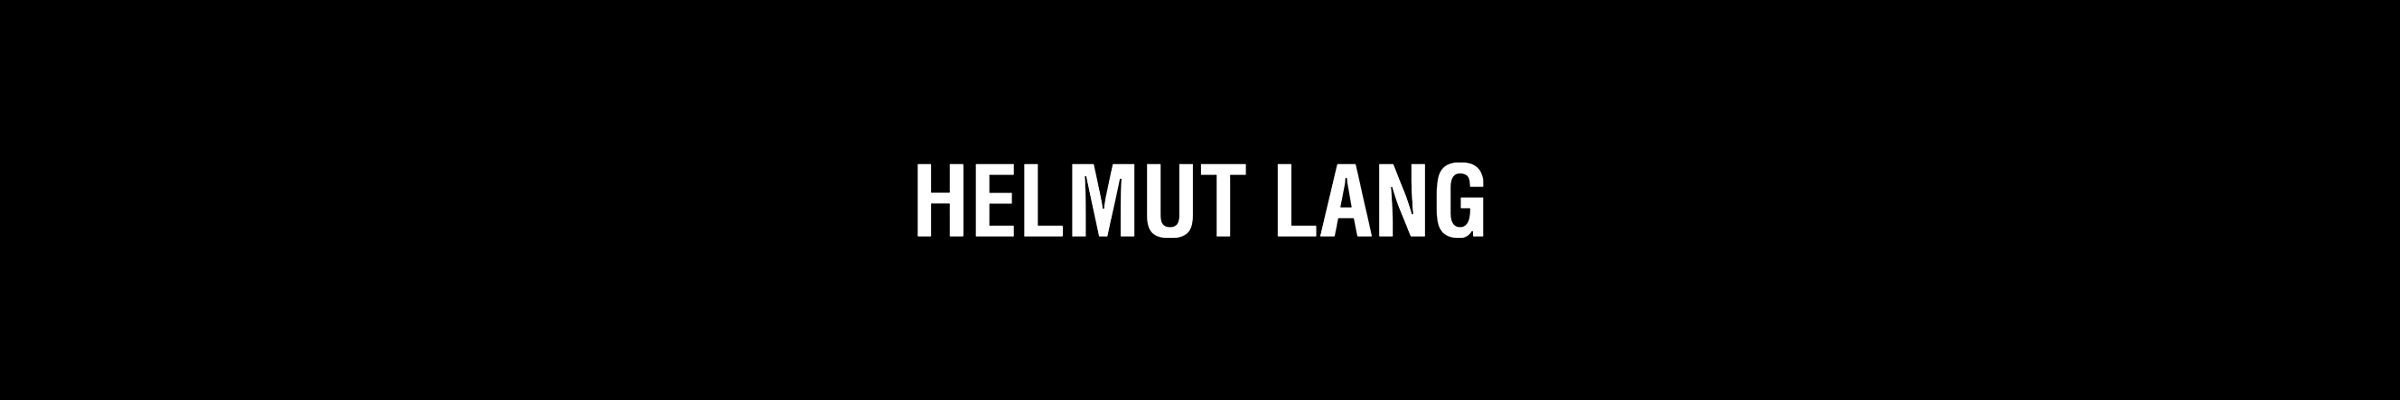 helmut-lang-banner